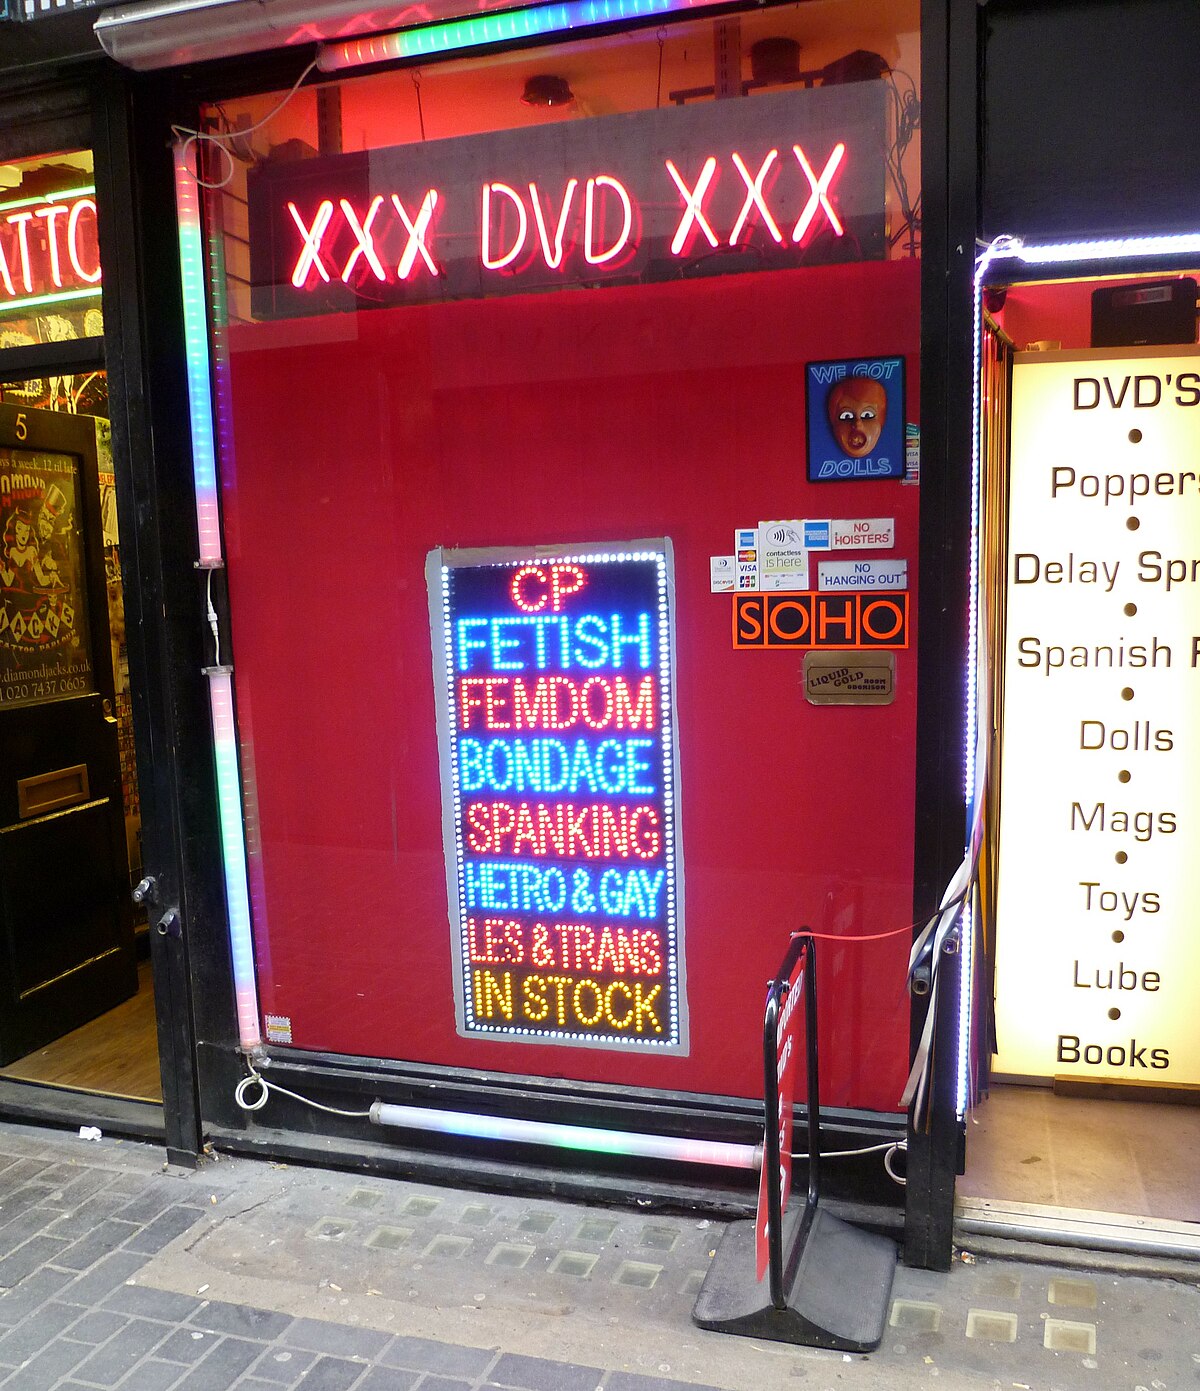 Xxx Delay Sex - Sex shop - Wikipedia